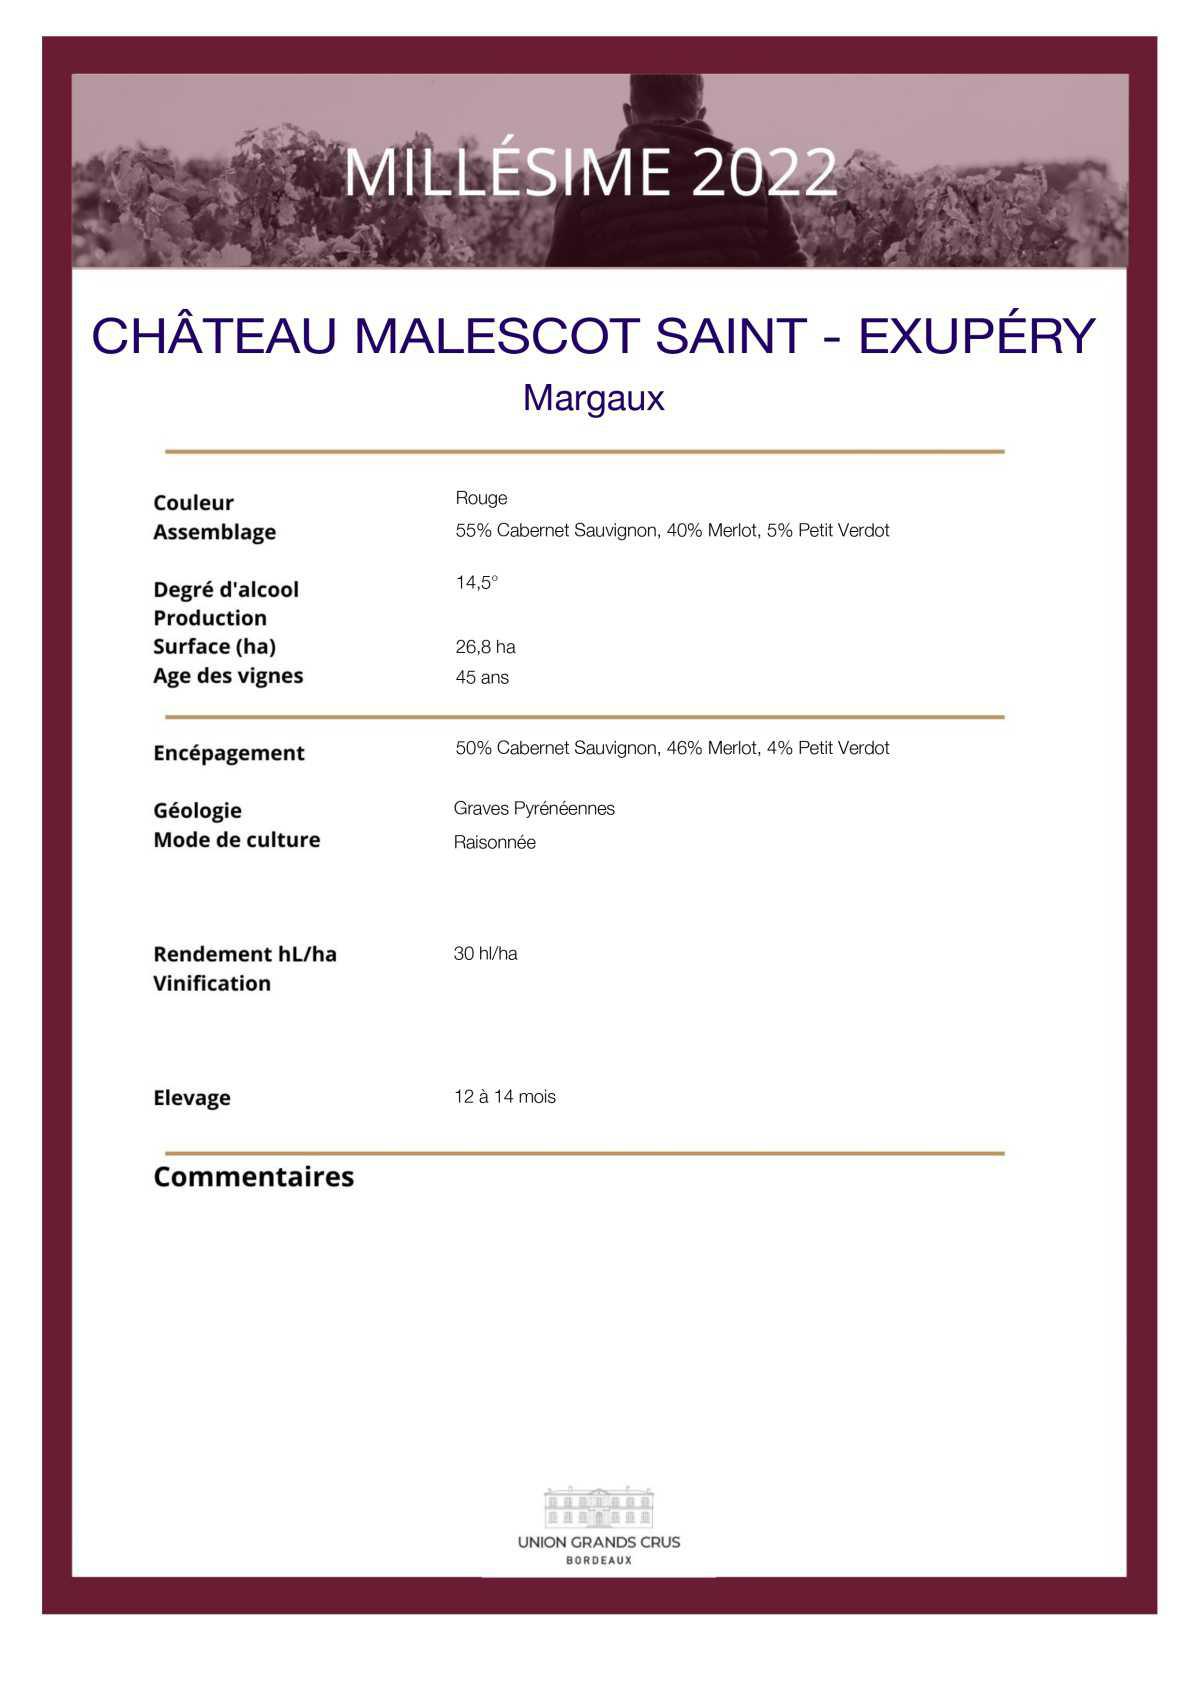  Château Malescot Saint - Exupéry 